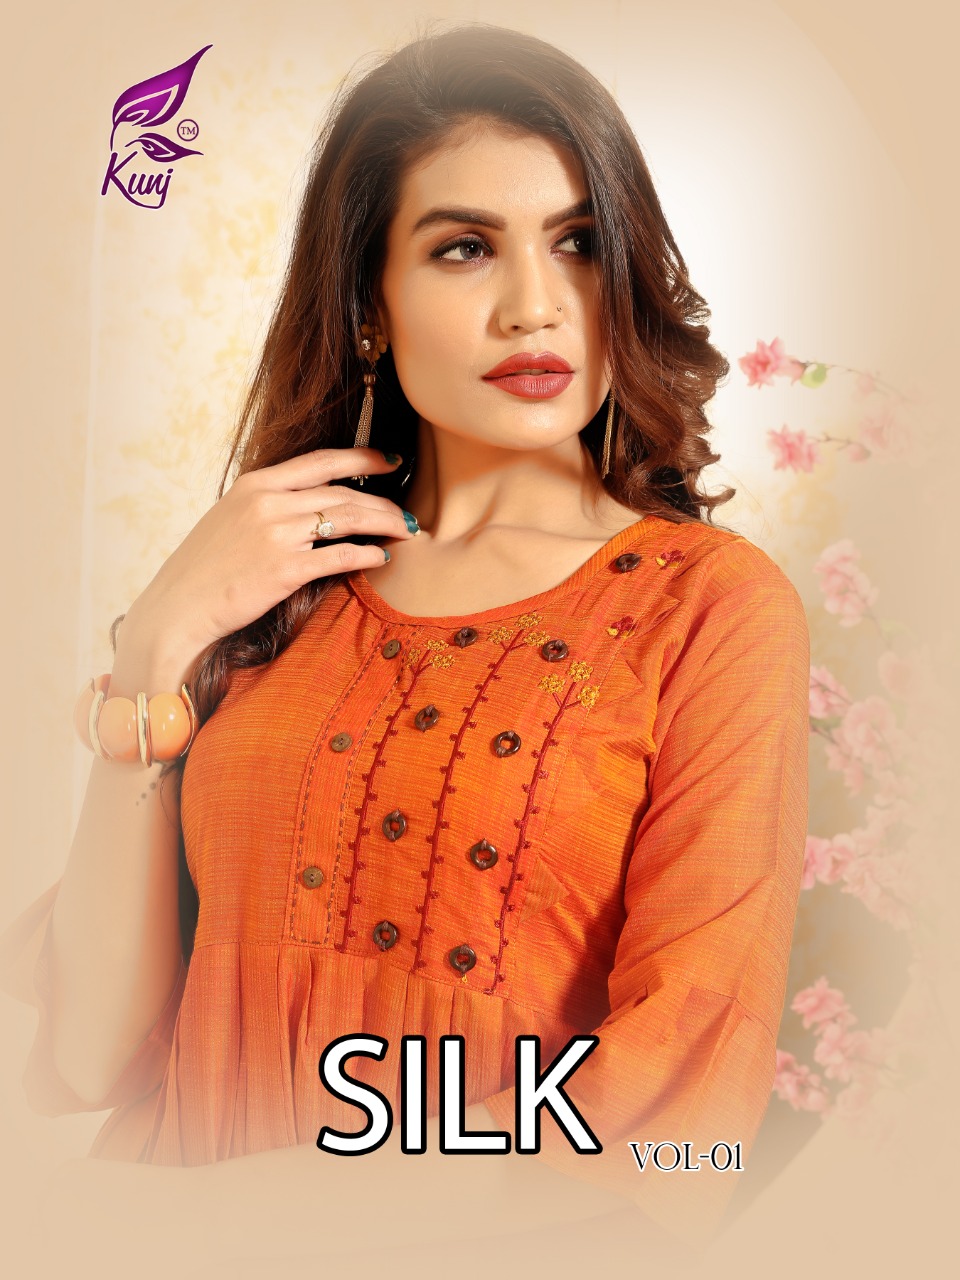 Kunj Present Silk Vol 1 Rayon Silk 101-108 Series Kurti Wholesale Rate